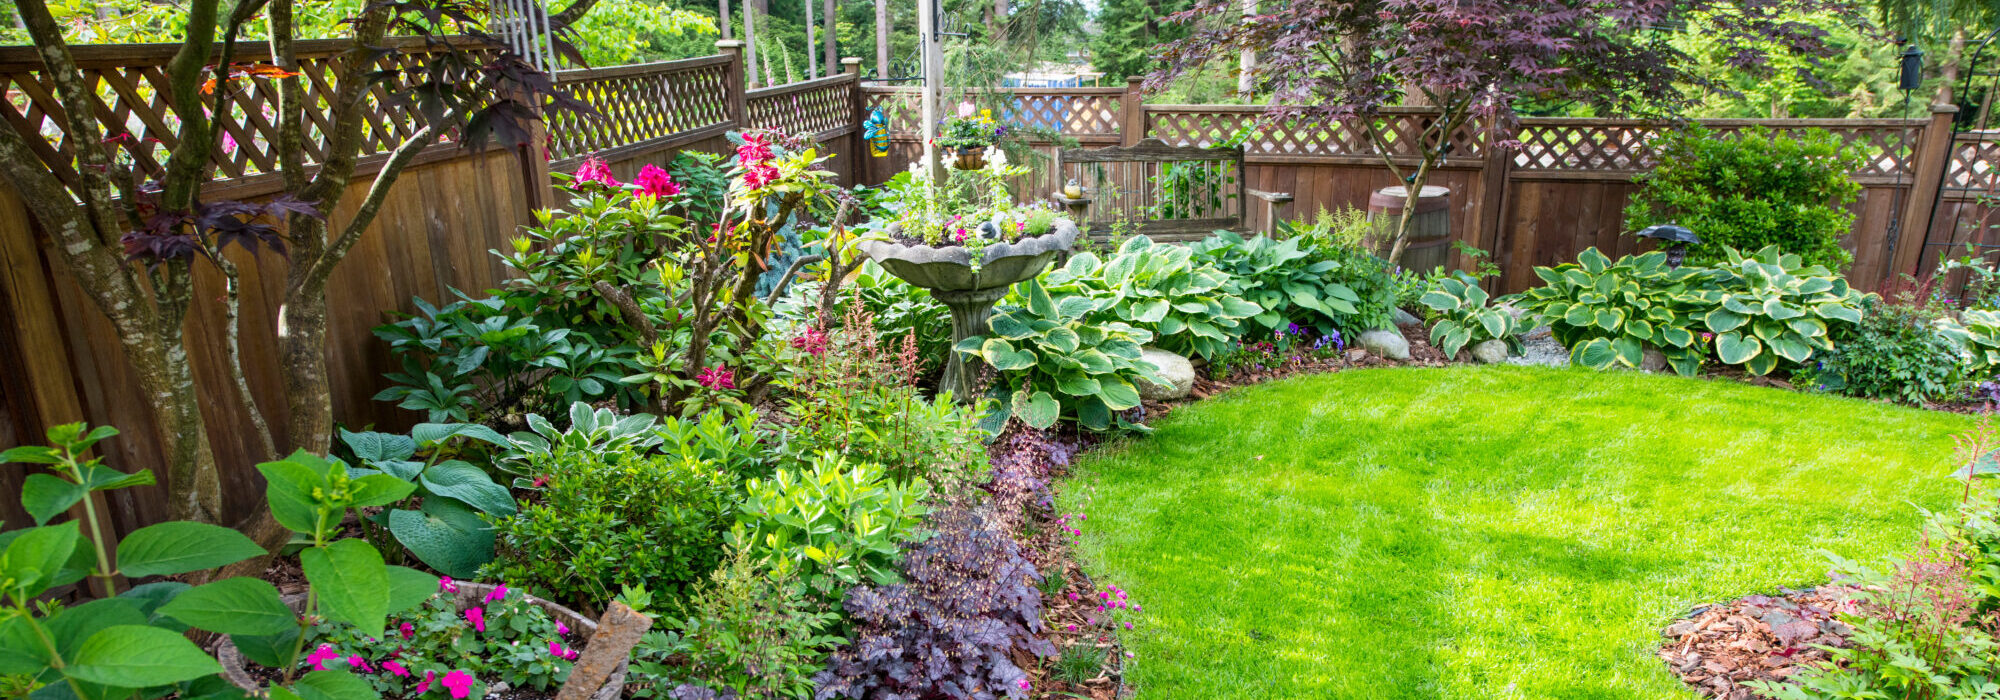 Large backyard landscaping space